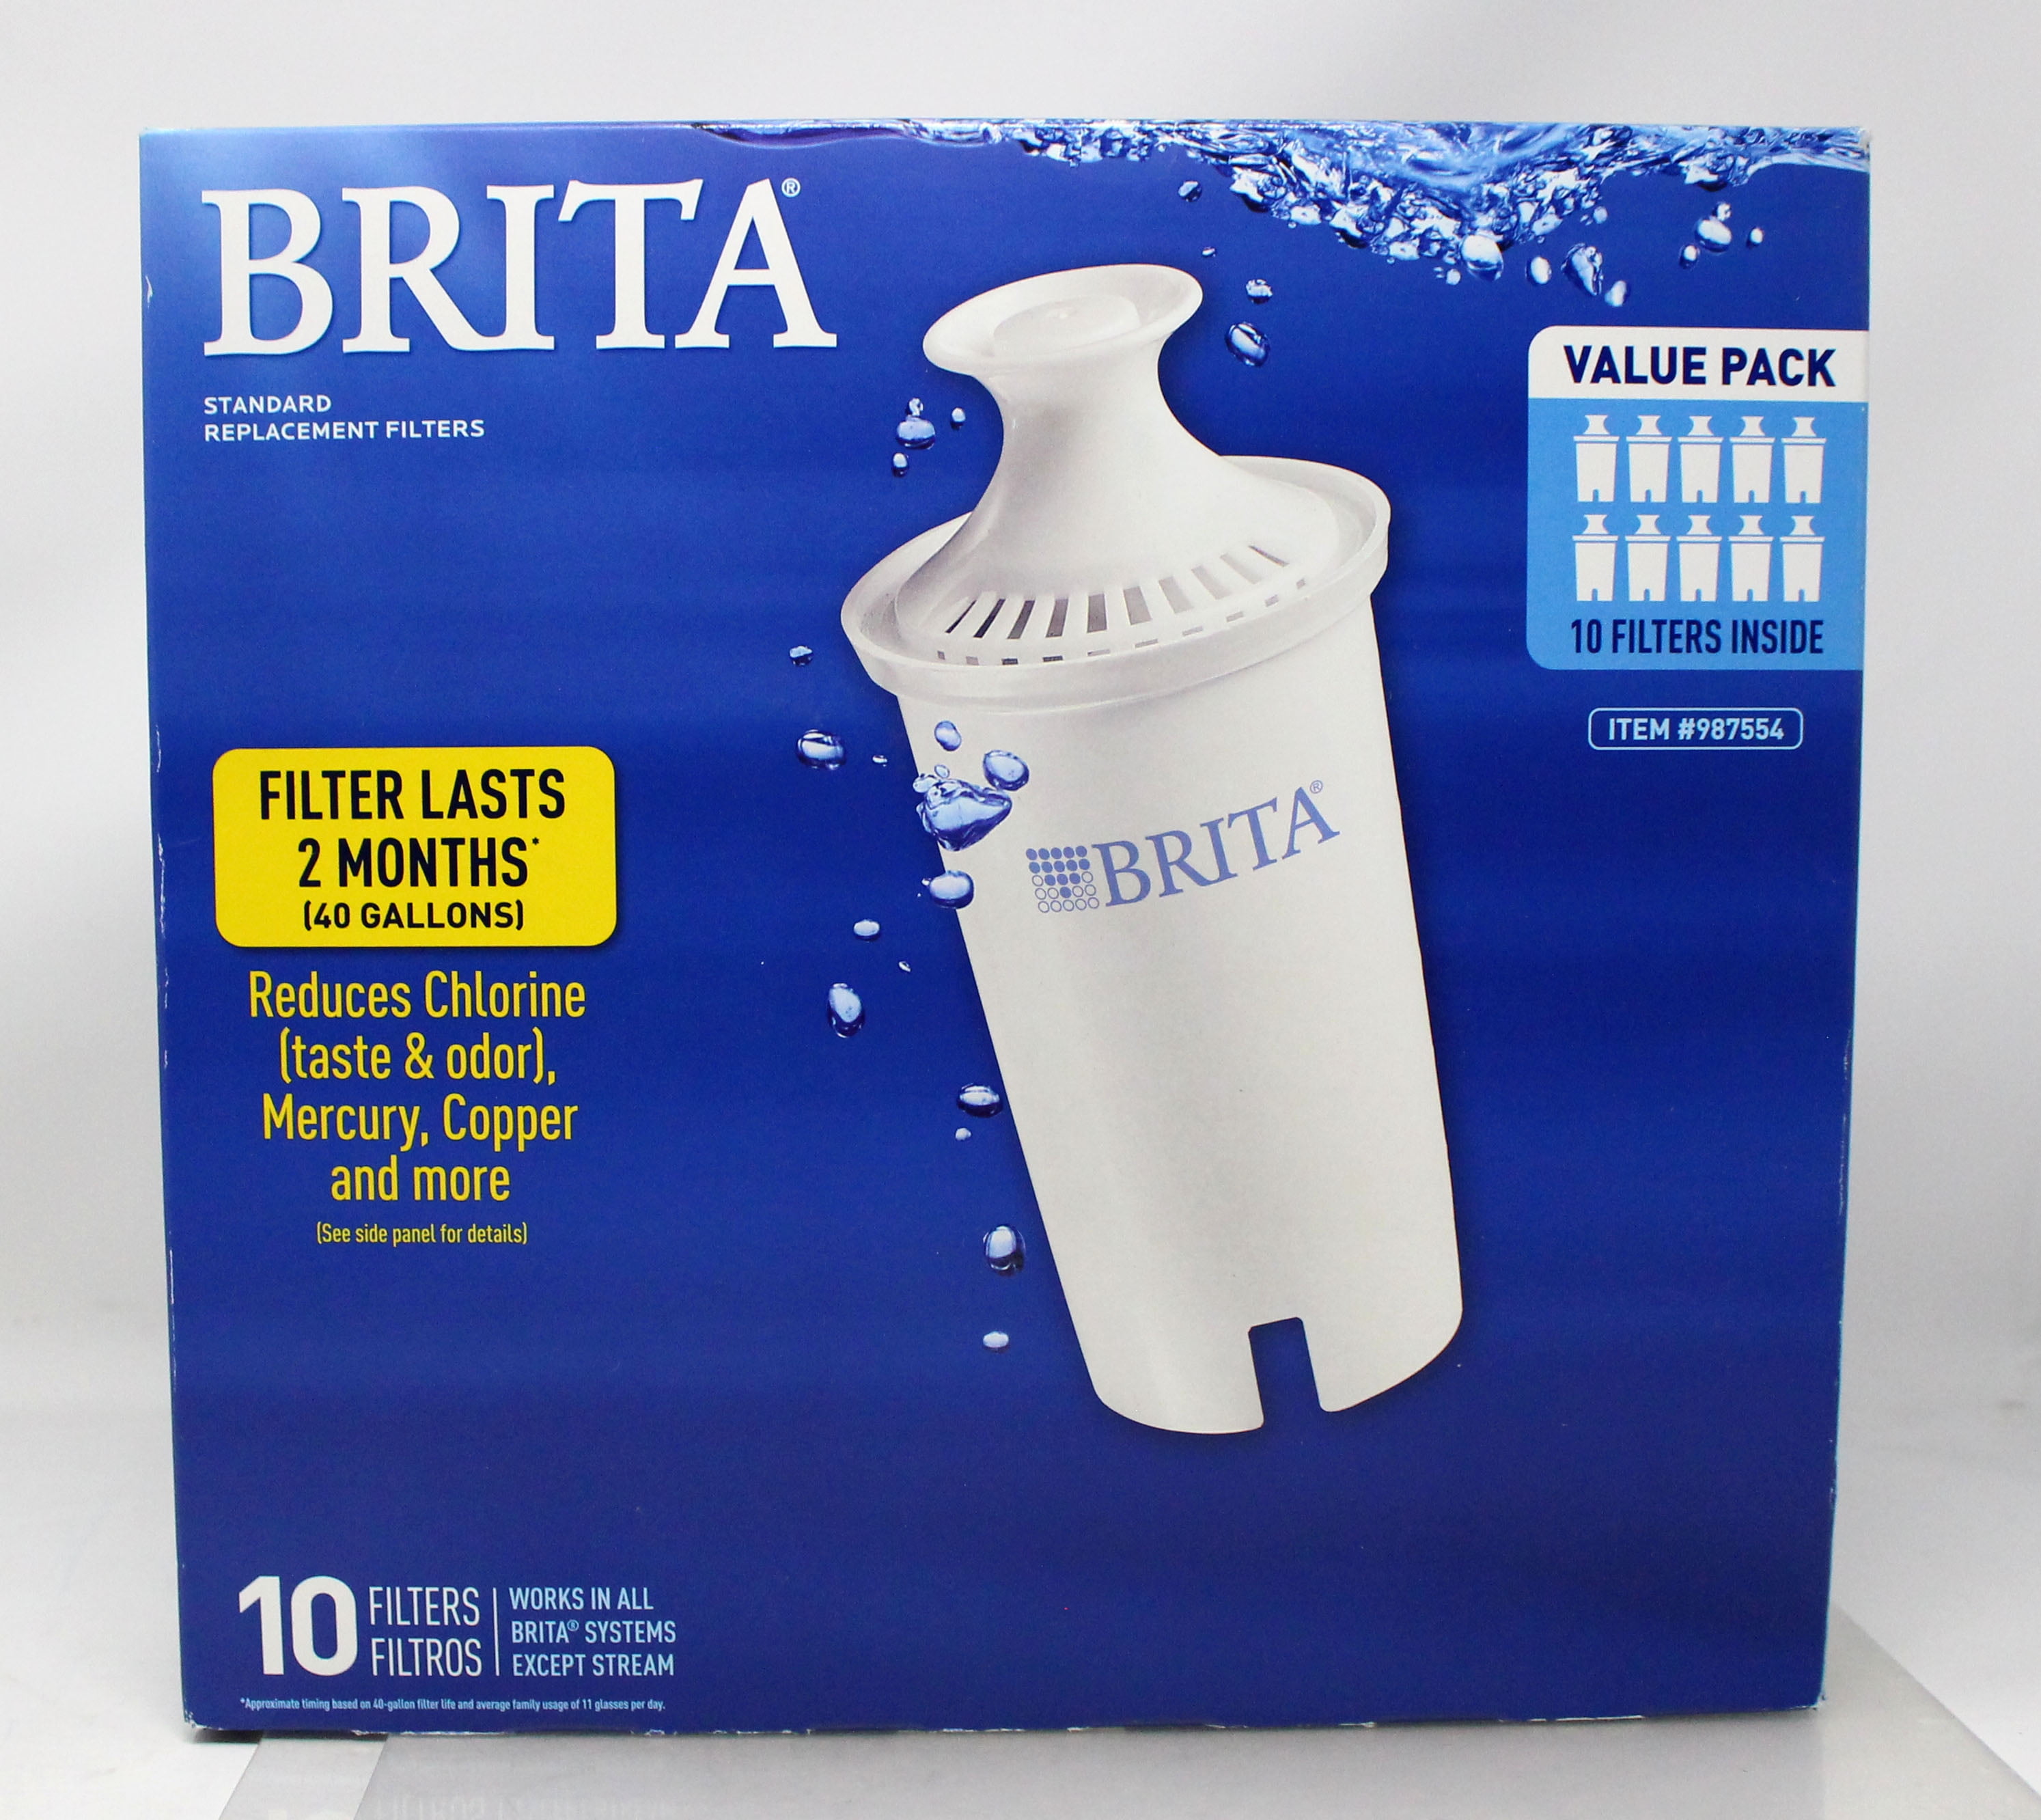 Brita Brita Standard Water Filter Standard Replacement Filters for Pitchers 5 pack NEW 